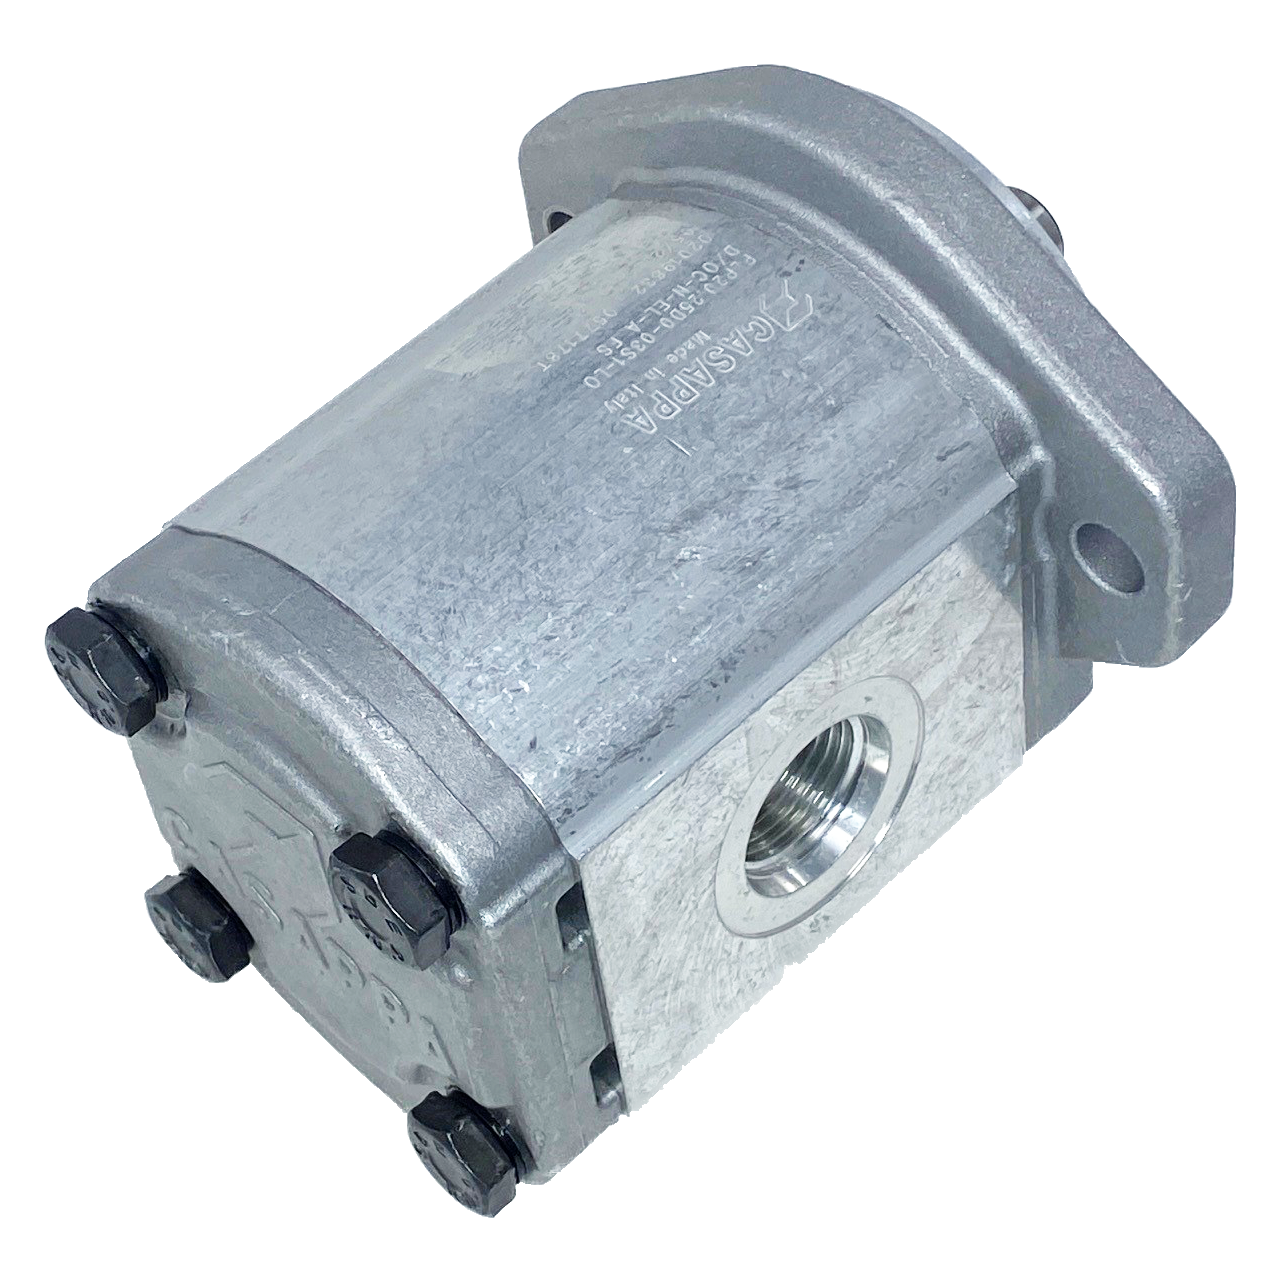 PHM20.27,8R0-31S9-LOC/OG-N-EL : Casappa Polaris Gear Motor, 28.21cc, 2900psi, 2500RPM, Reversible, External Drain, 5/8" Bore x 5/32" Key Shaft, SAE A 2-Bolt Flange, 0.625 (5/8") #10 SAE In, 1.25" #20 SAE Out, Cast Iron Body, Aluminum Flange